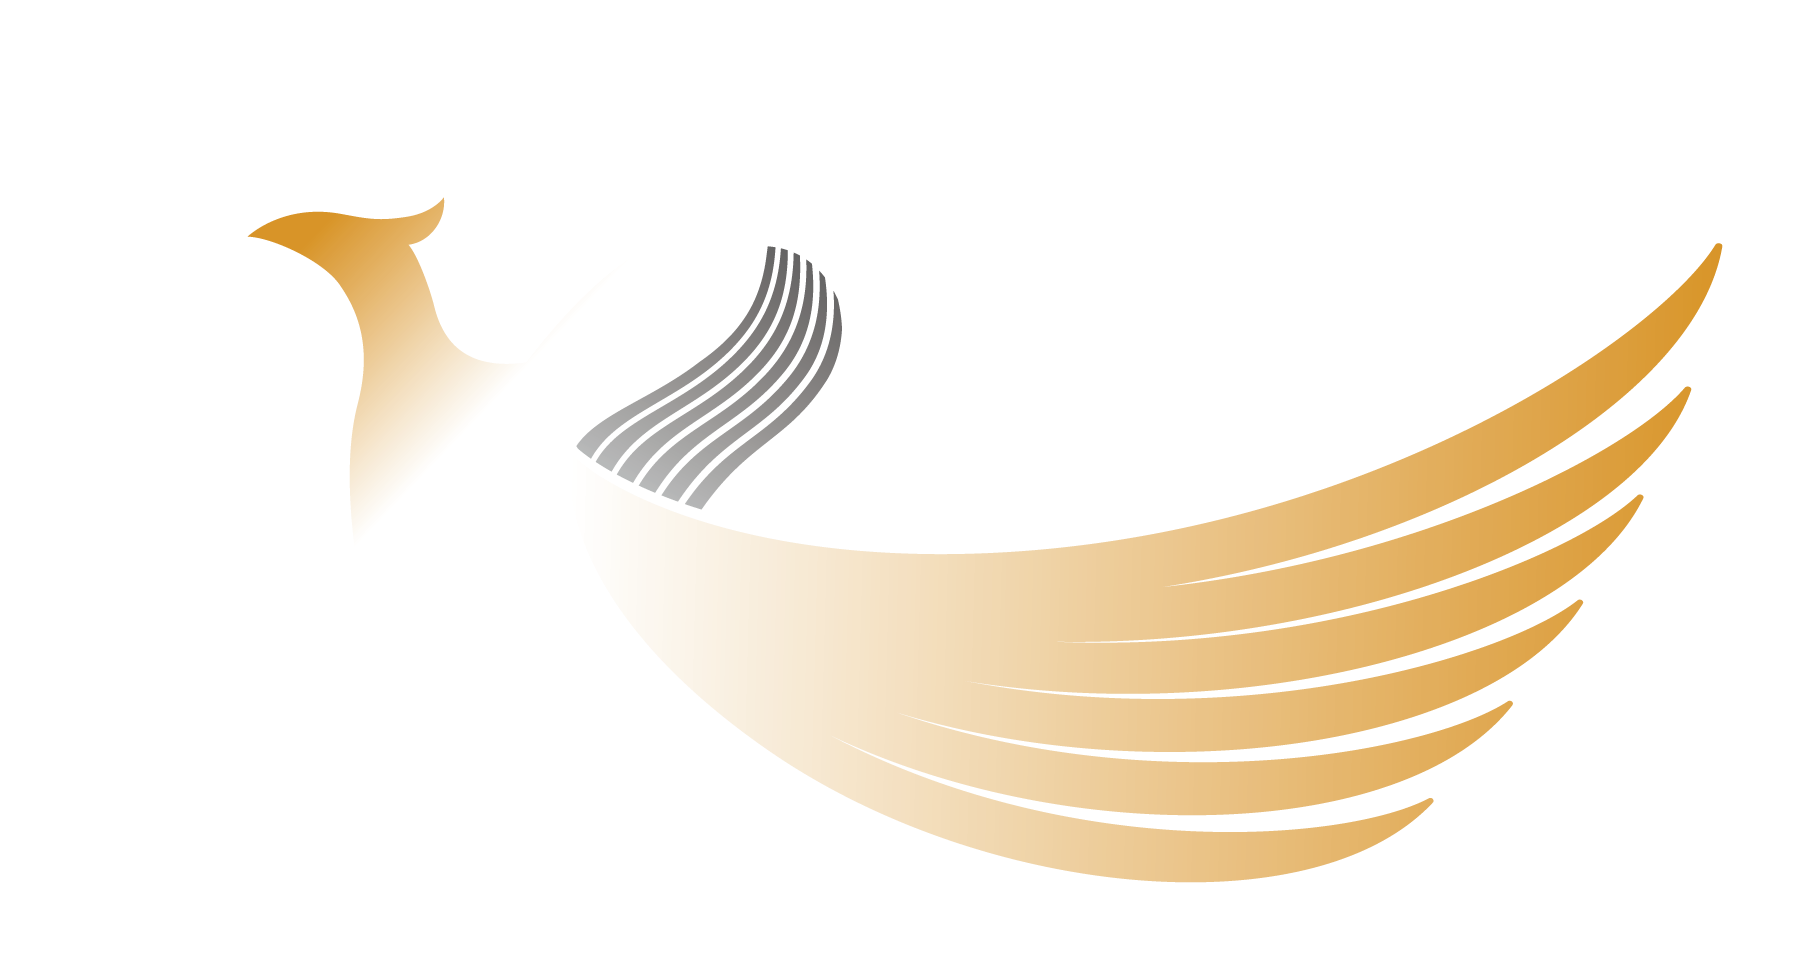 Code for Japan Summit 2021 Rebirth Logo